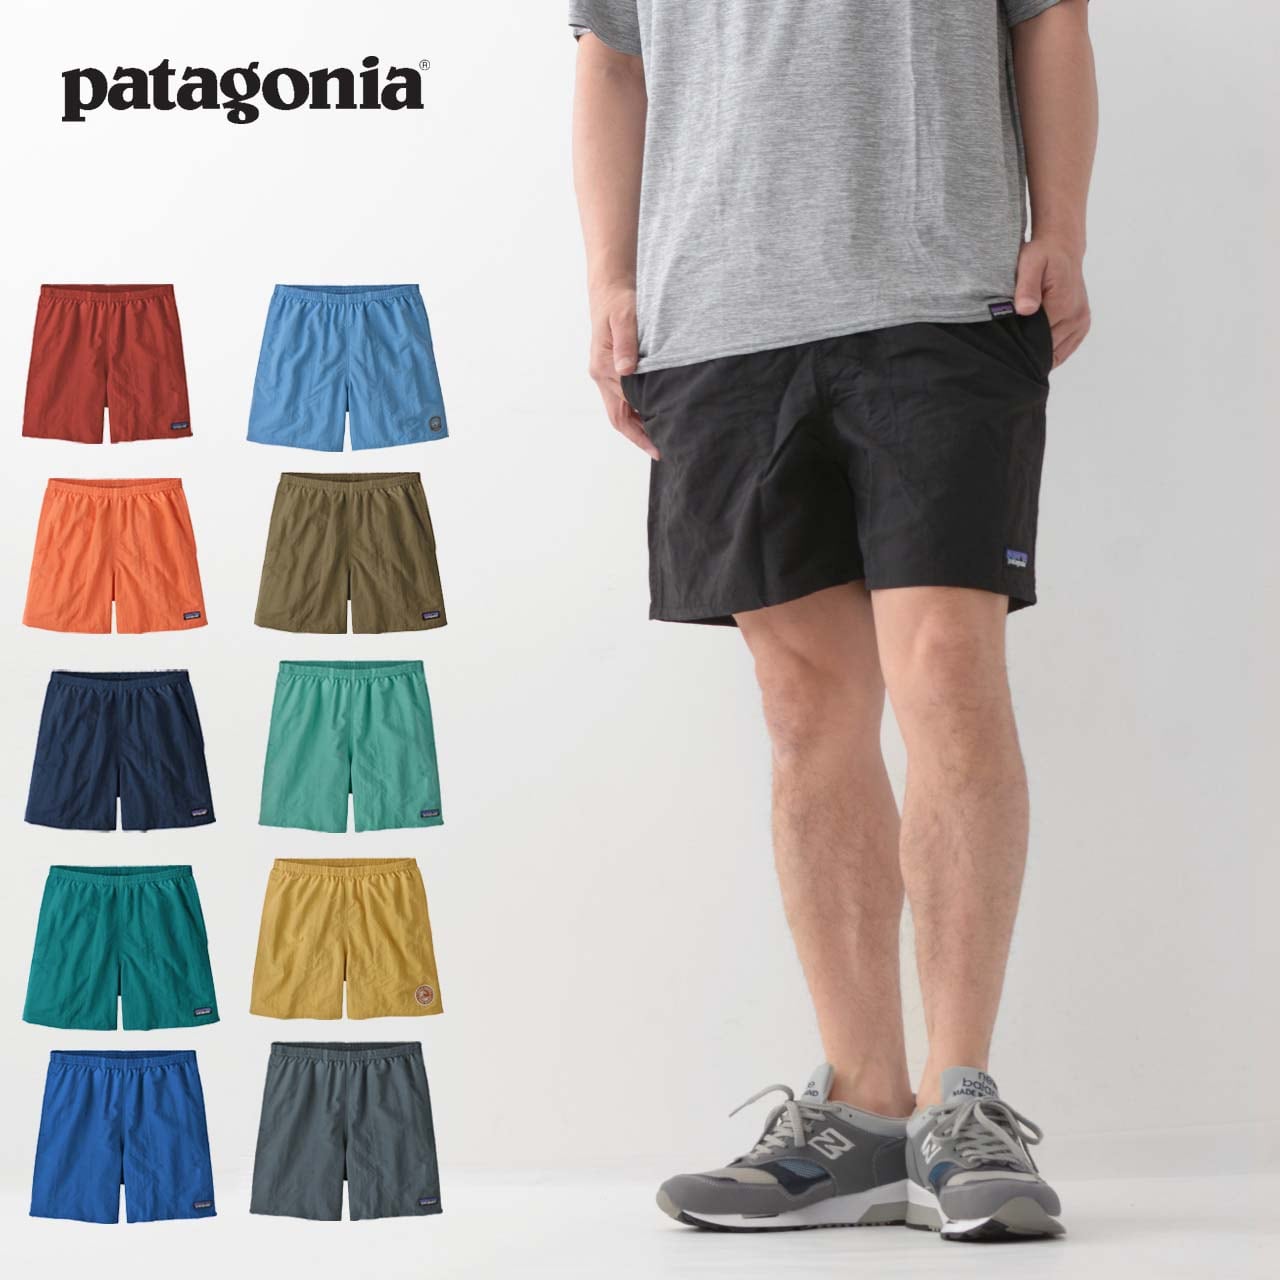 Patagonia [パタゴニア] M's Baggies Shorts - 5 in. [57022]  メンズ・バギーズ・ショーツ(13cm)・ショートパンツ・トレーニングパンツ・MEN'S/LADY'S | refalt online store